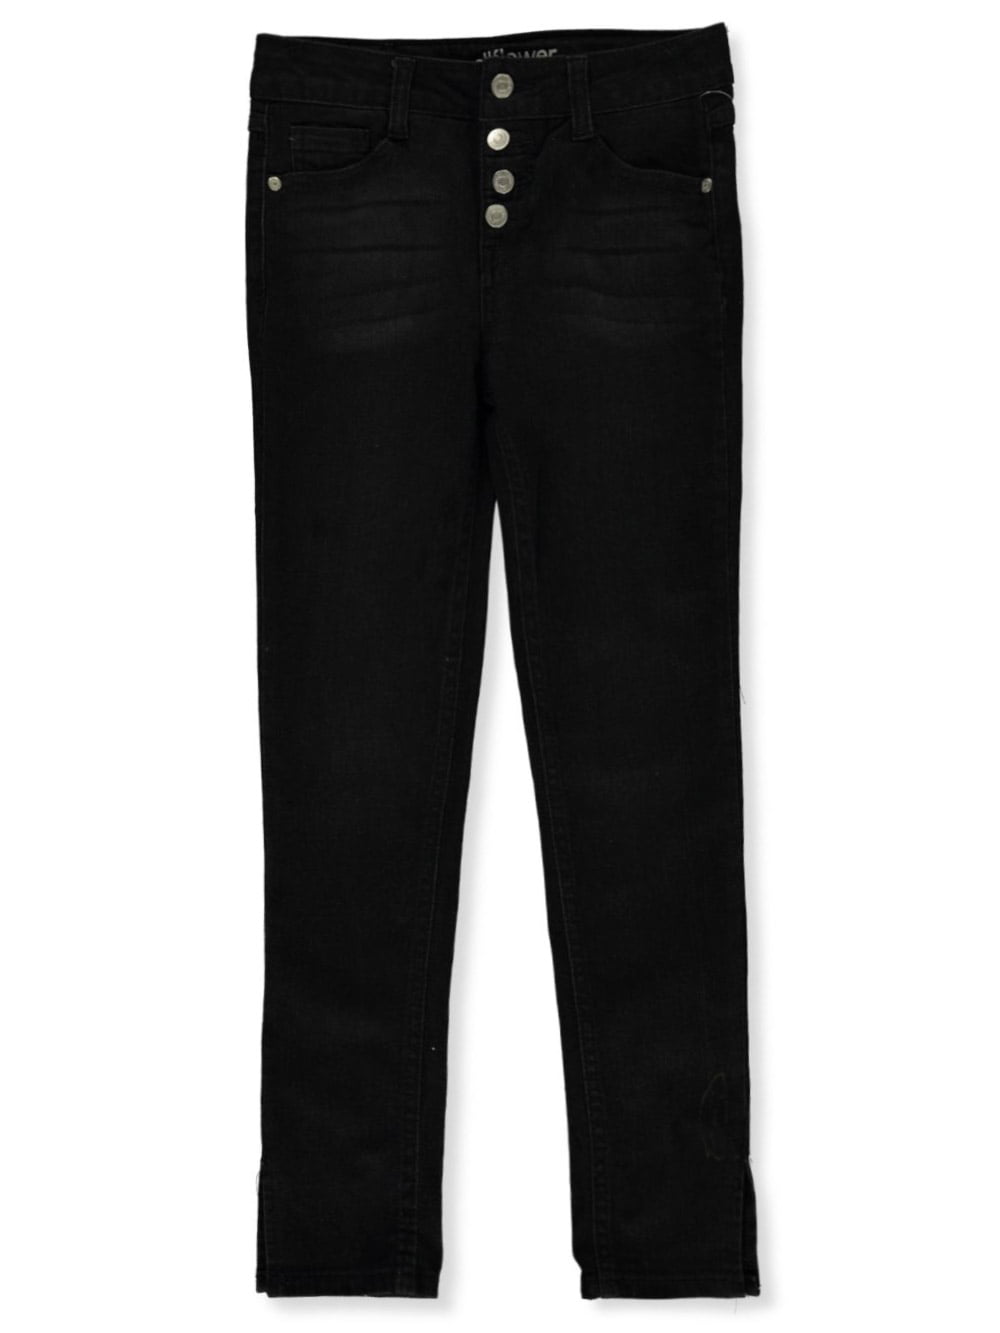 Wallflower Girls' Skinny Jeans - black, 16 (Big Girls) - Walmart.com